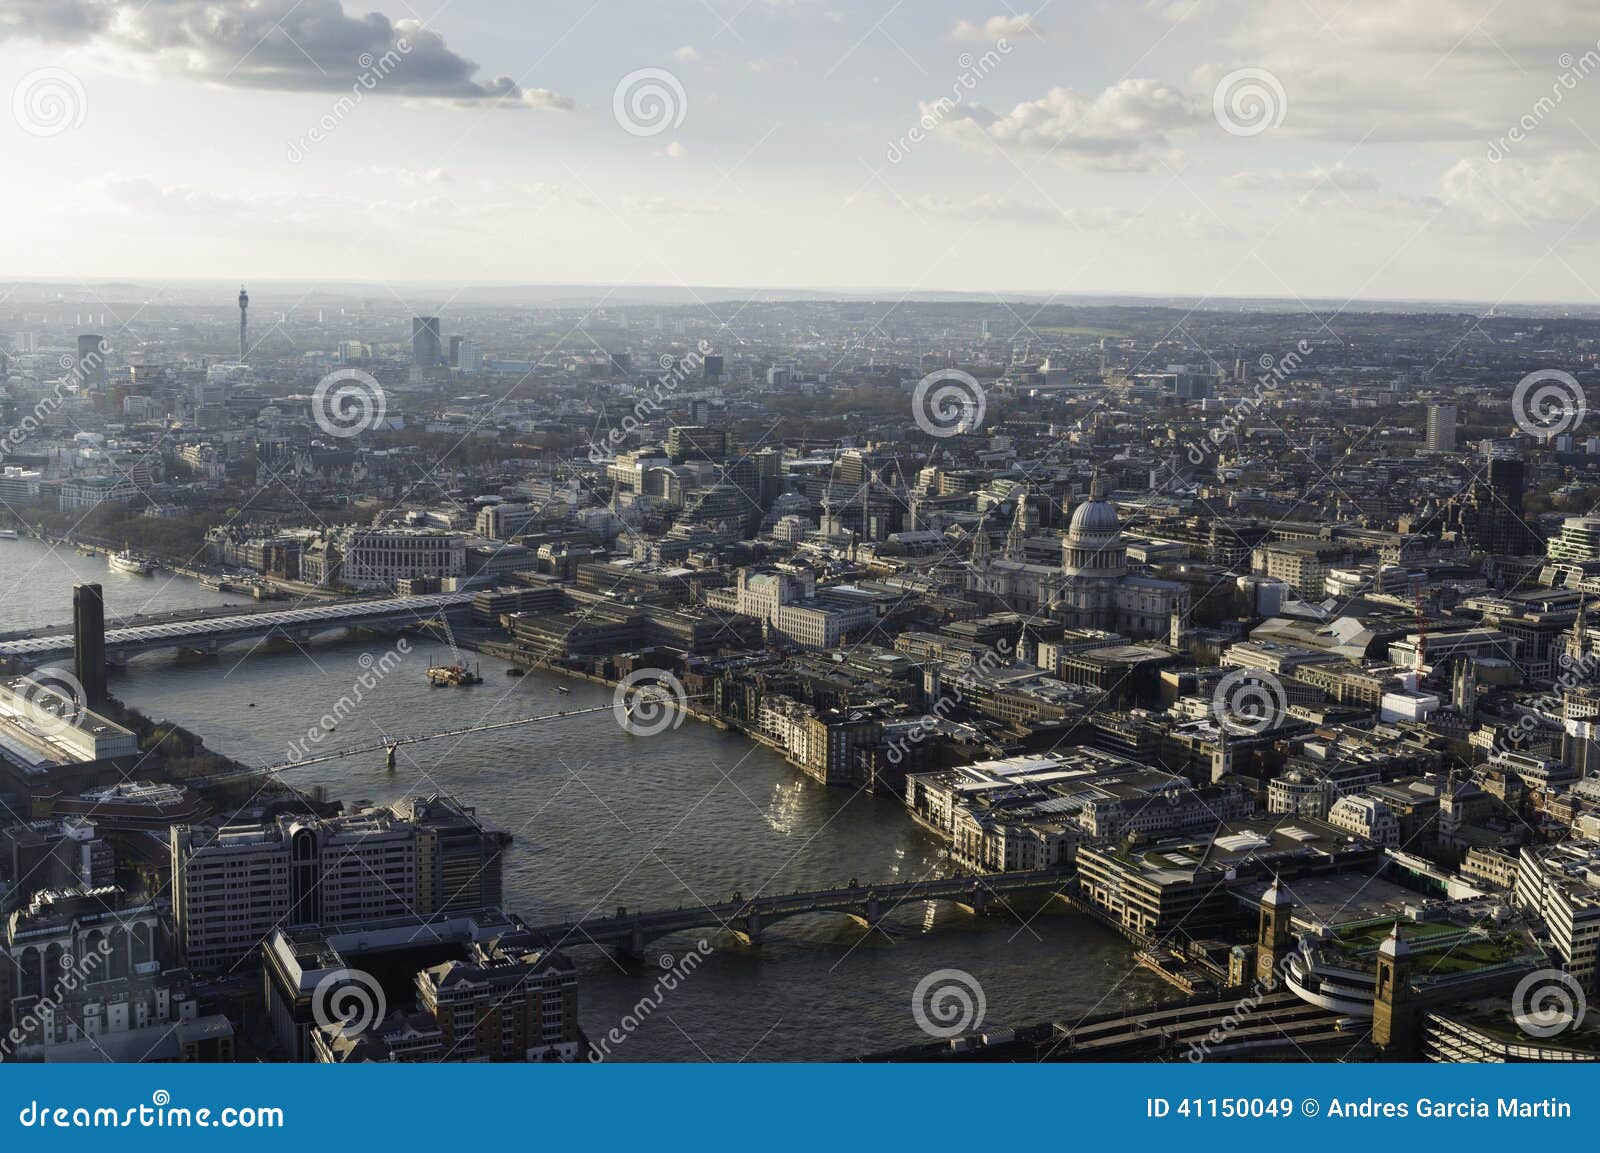 Cityscape, London stock image. Image of outdoors, london - 41150049